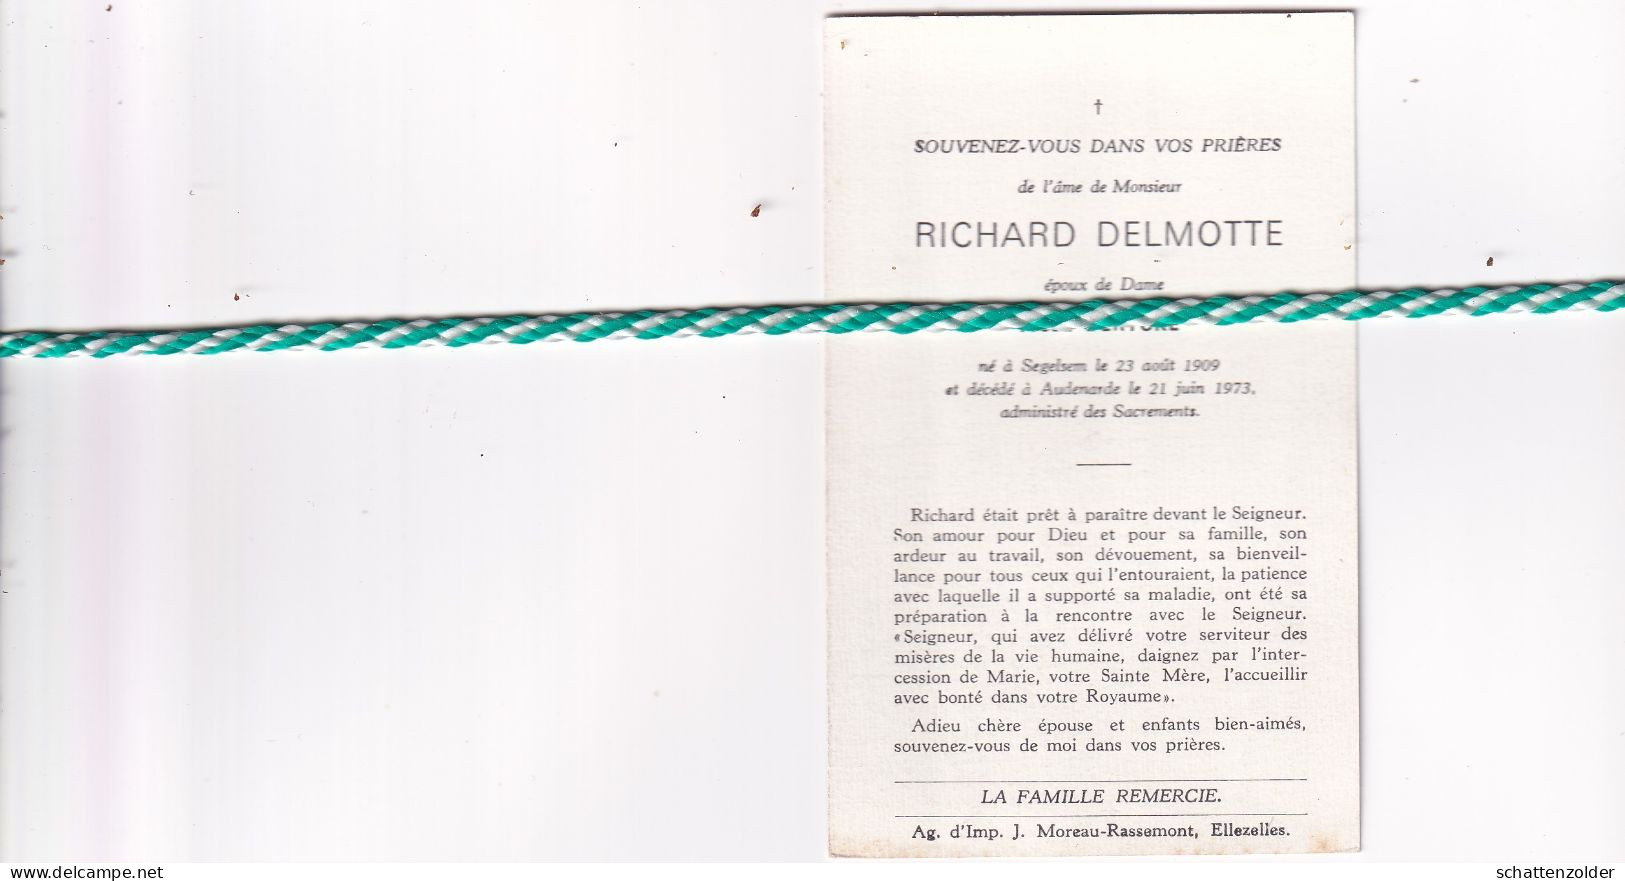 Richard Delmotte-Derycke, Segelsem 1909, Audenarde 1973 - Obituary Notices